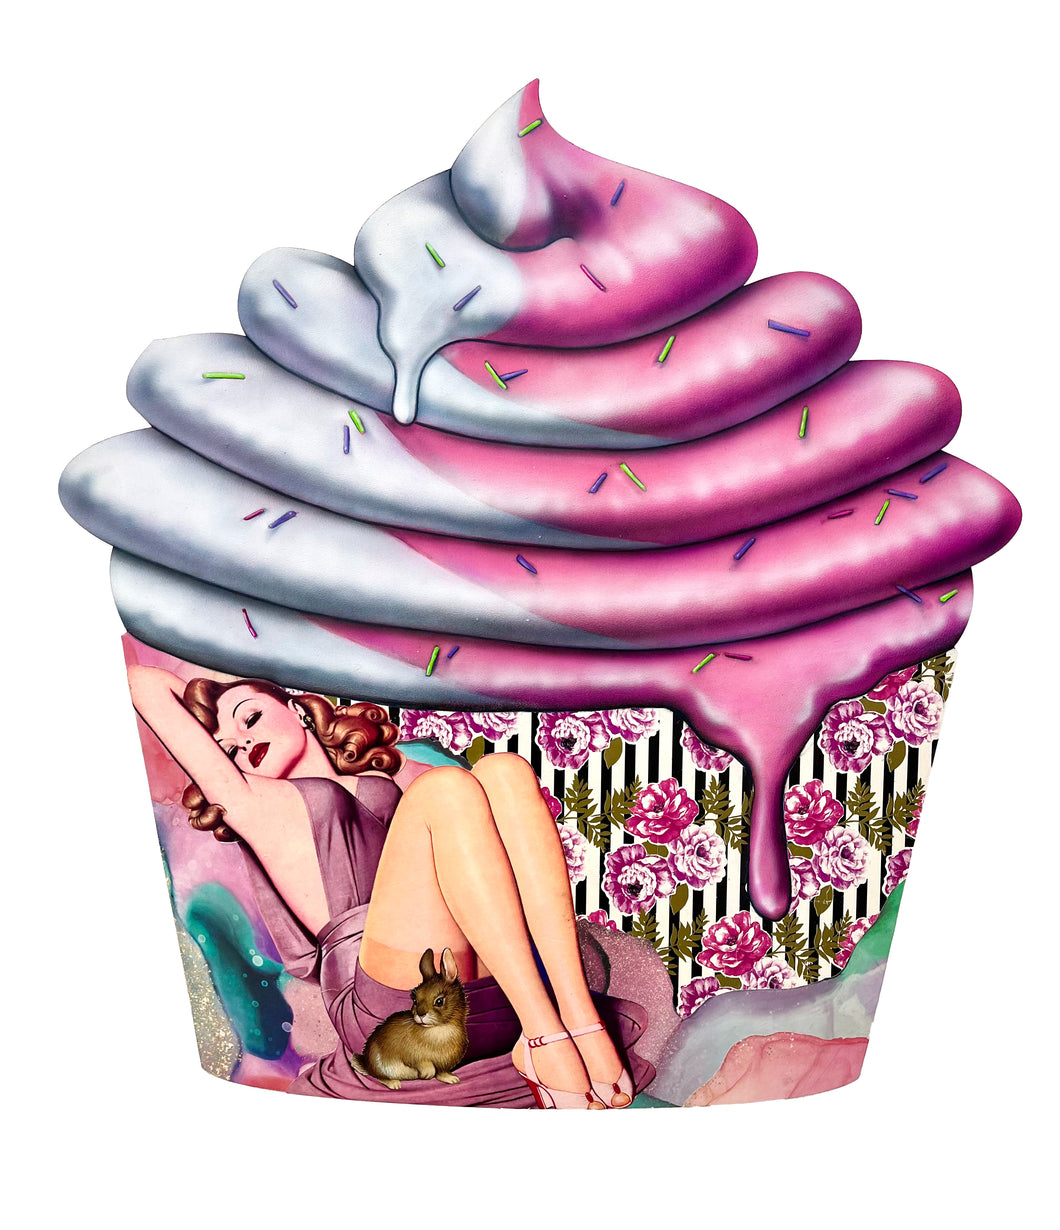 L. Croskey - “Dream Flavored Cupcake”